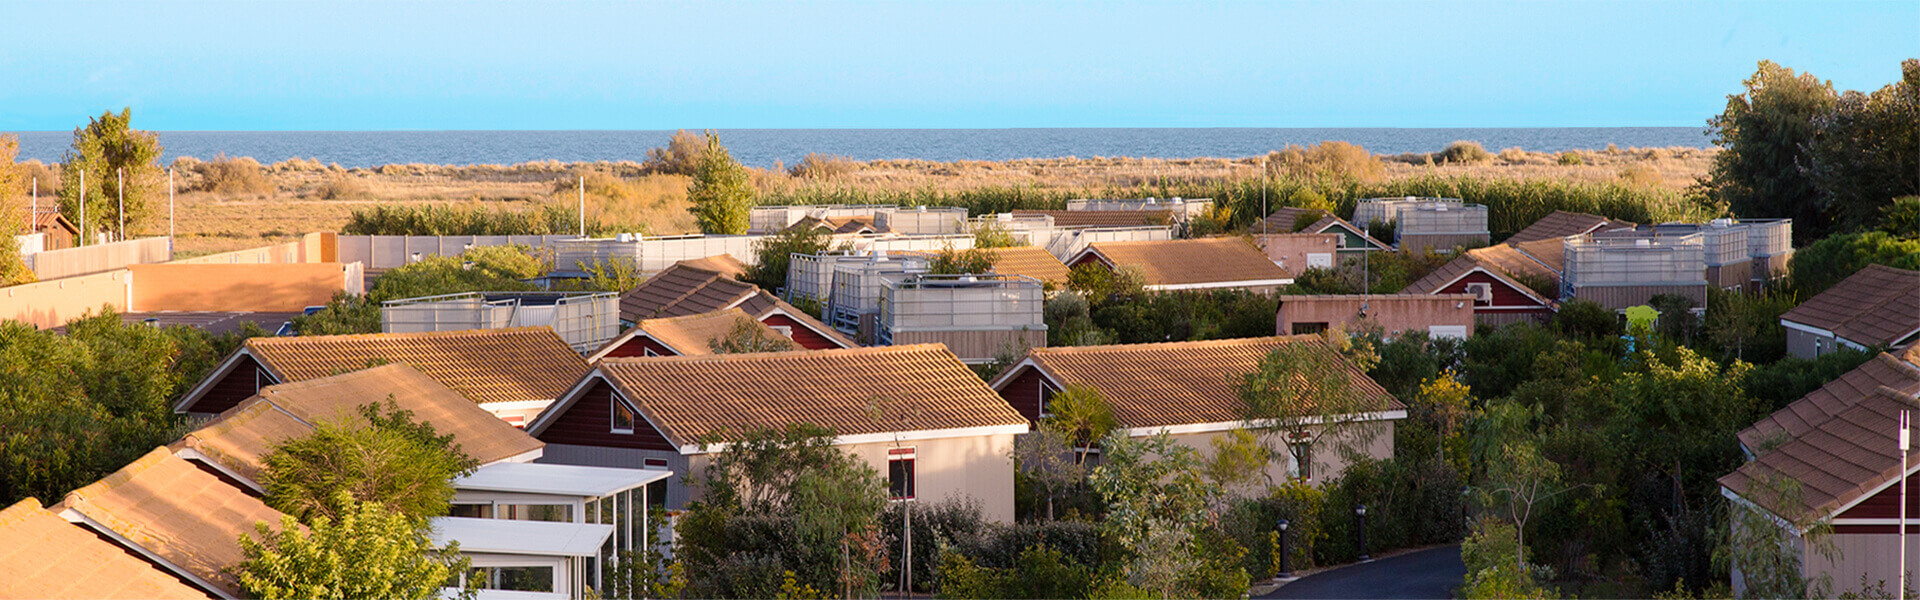 Residential leisure park in Vendres